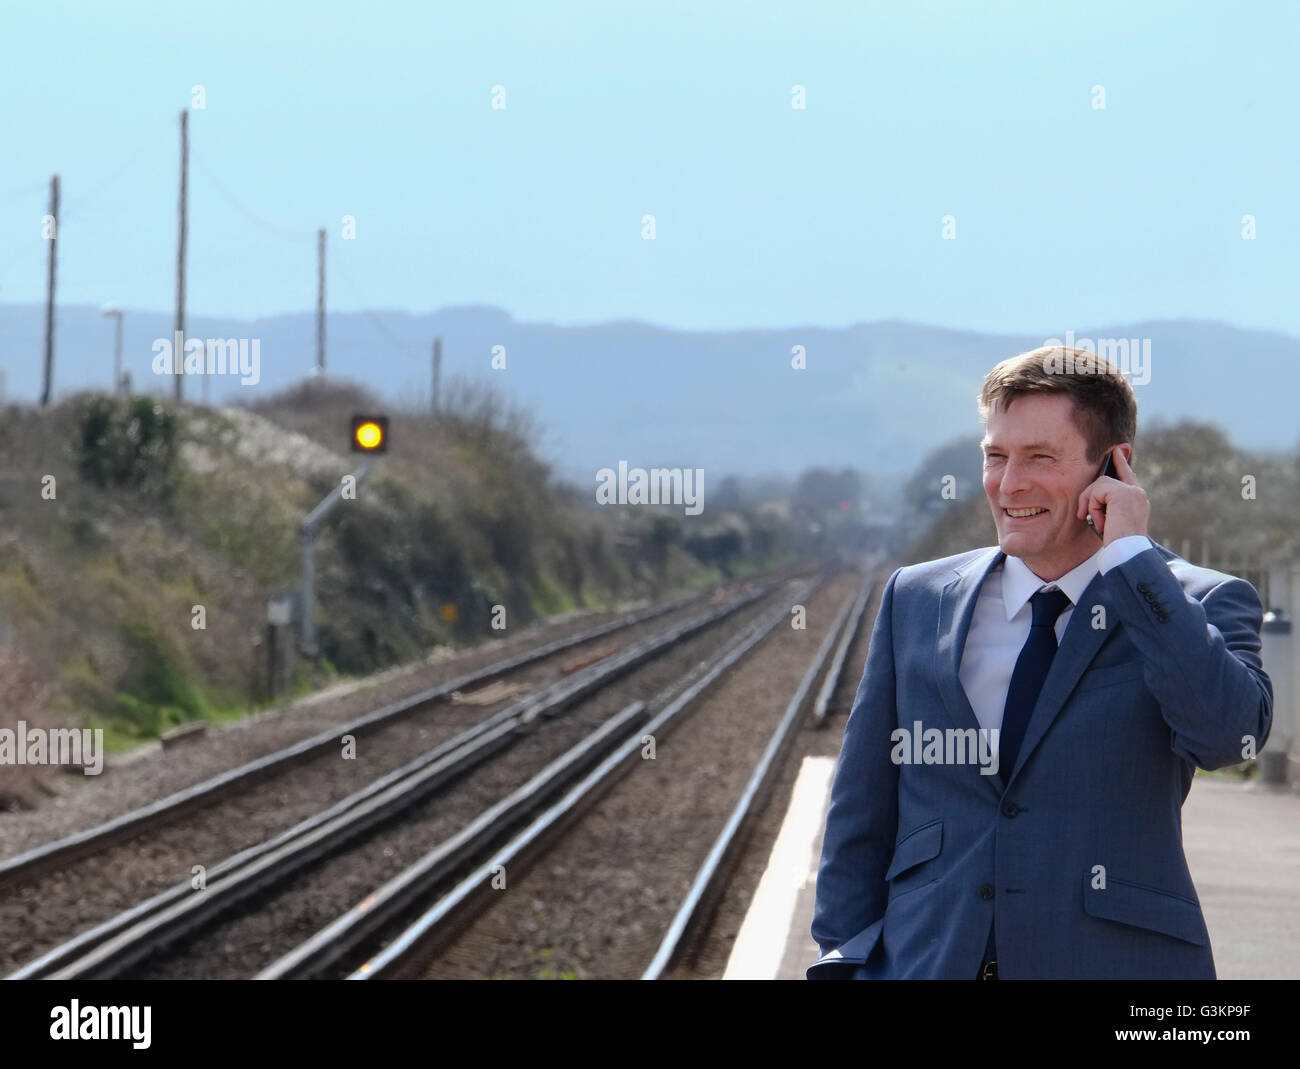 Mature businessman standing on train platform, using smartphone Stock Photo